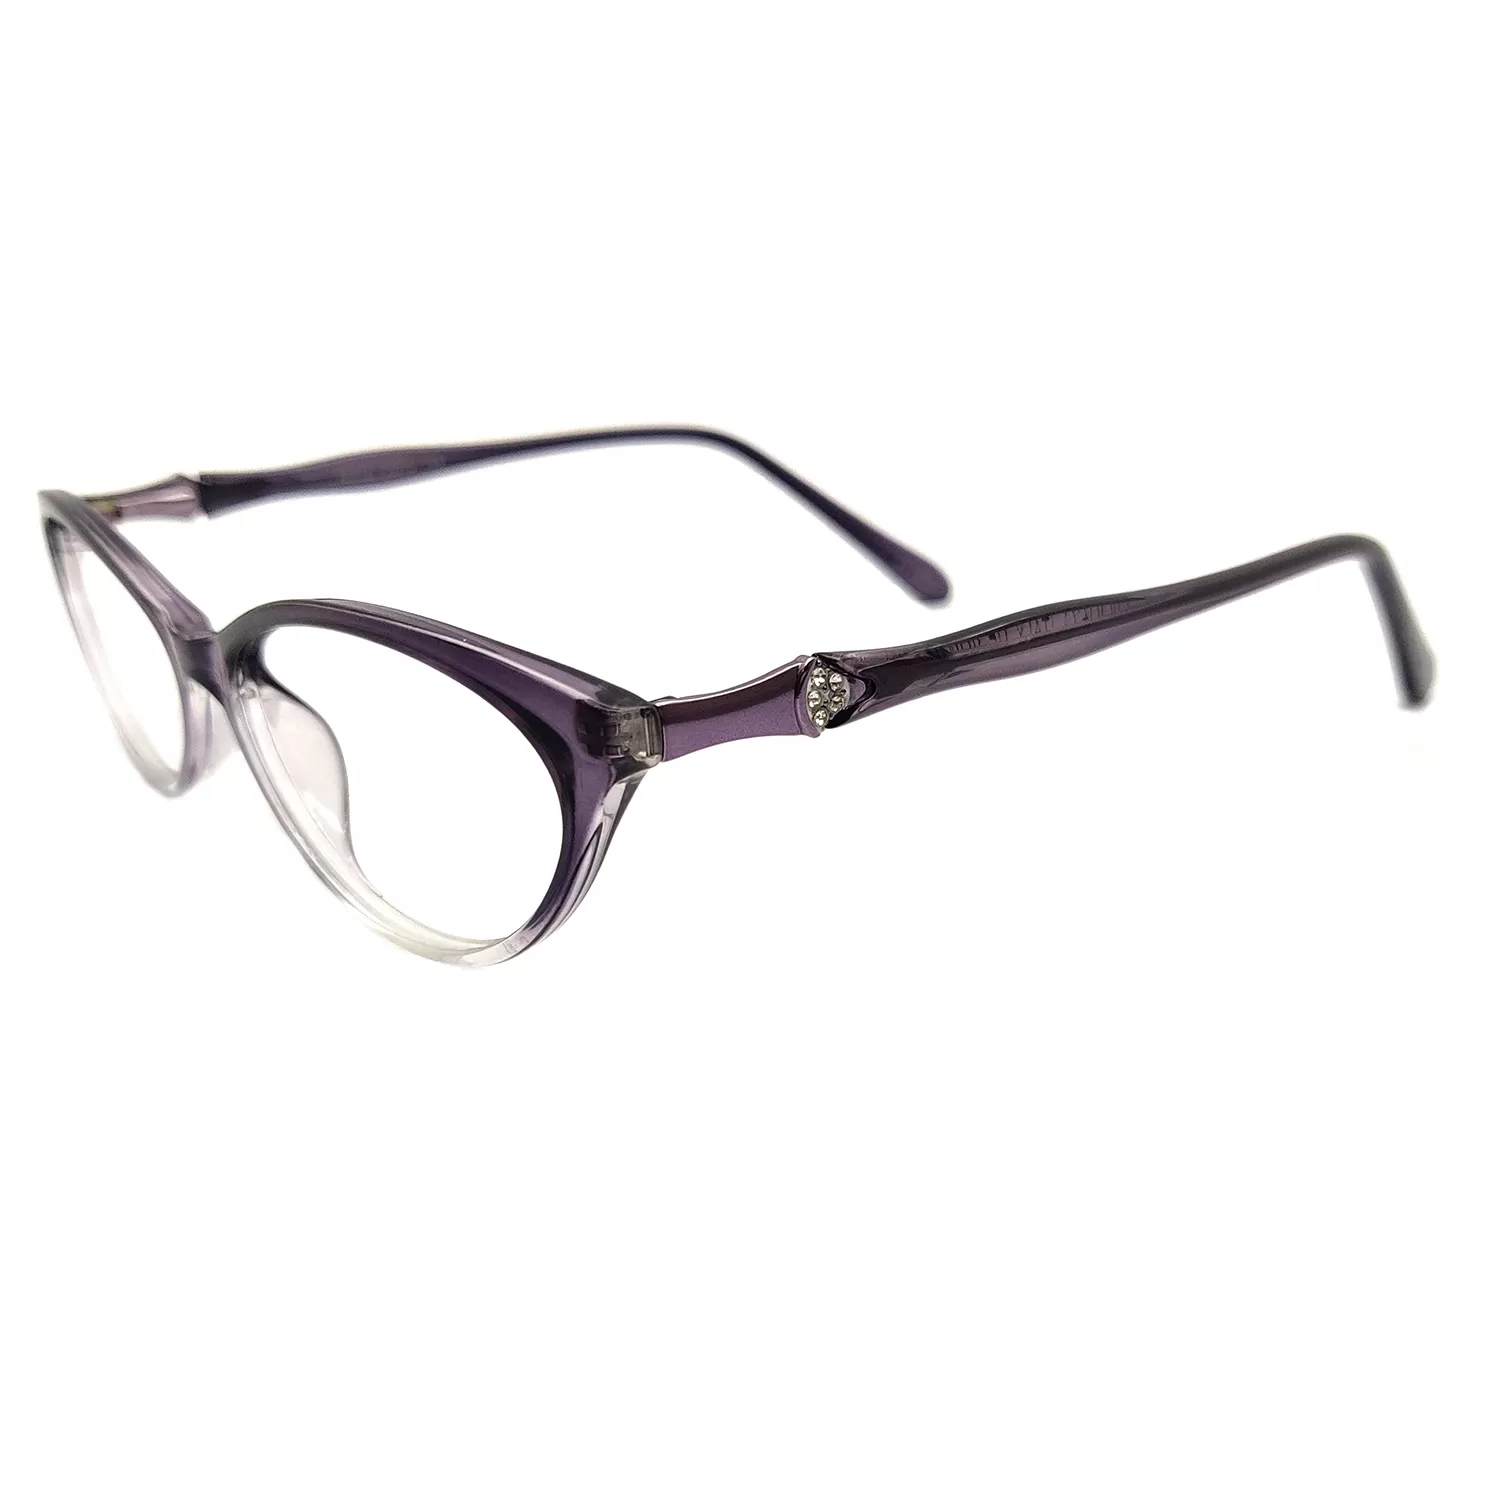 buy latest eyeglasses online at chashmah.com